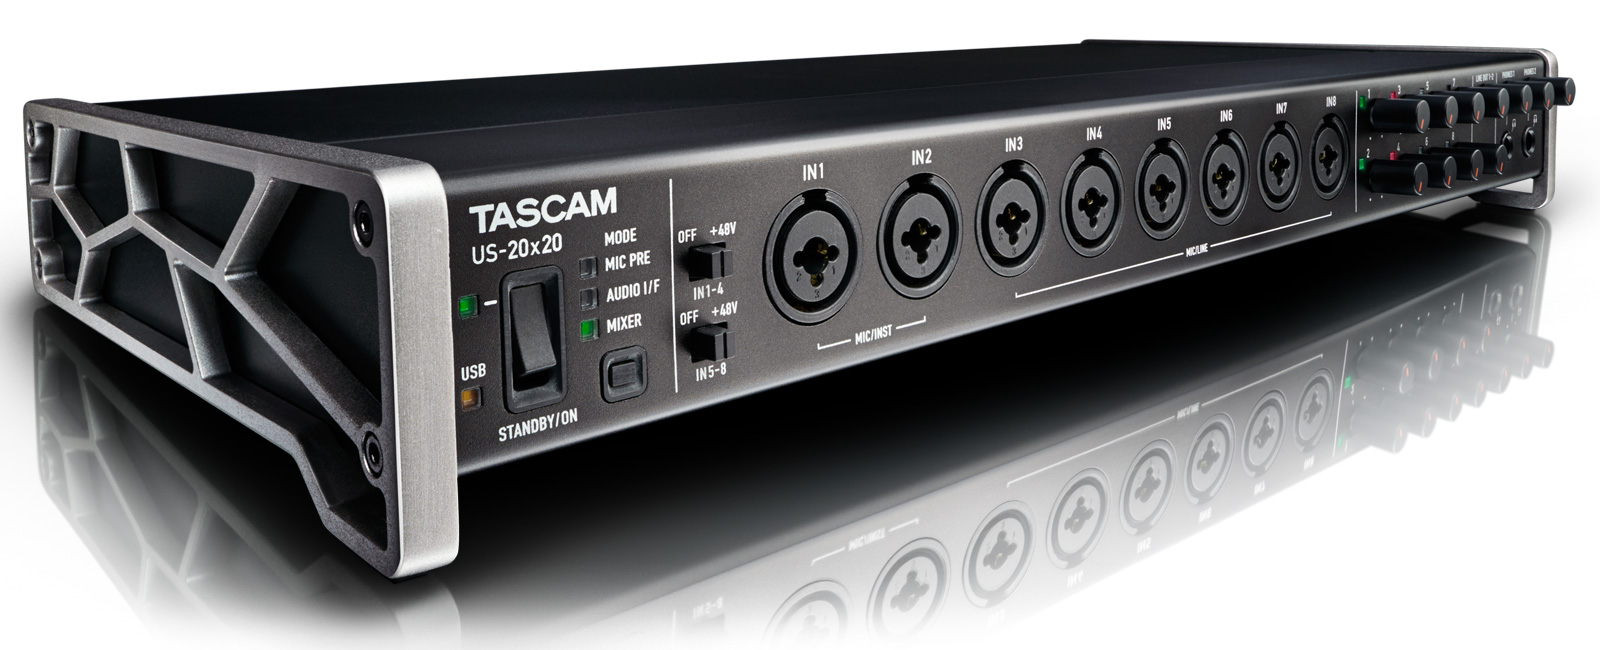 TASCAM Announces USB Audio Interface Driver Version 4.0 for Windows